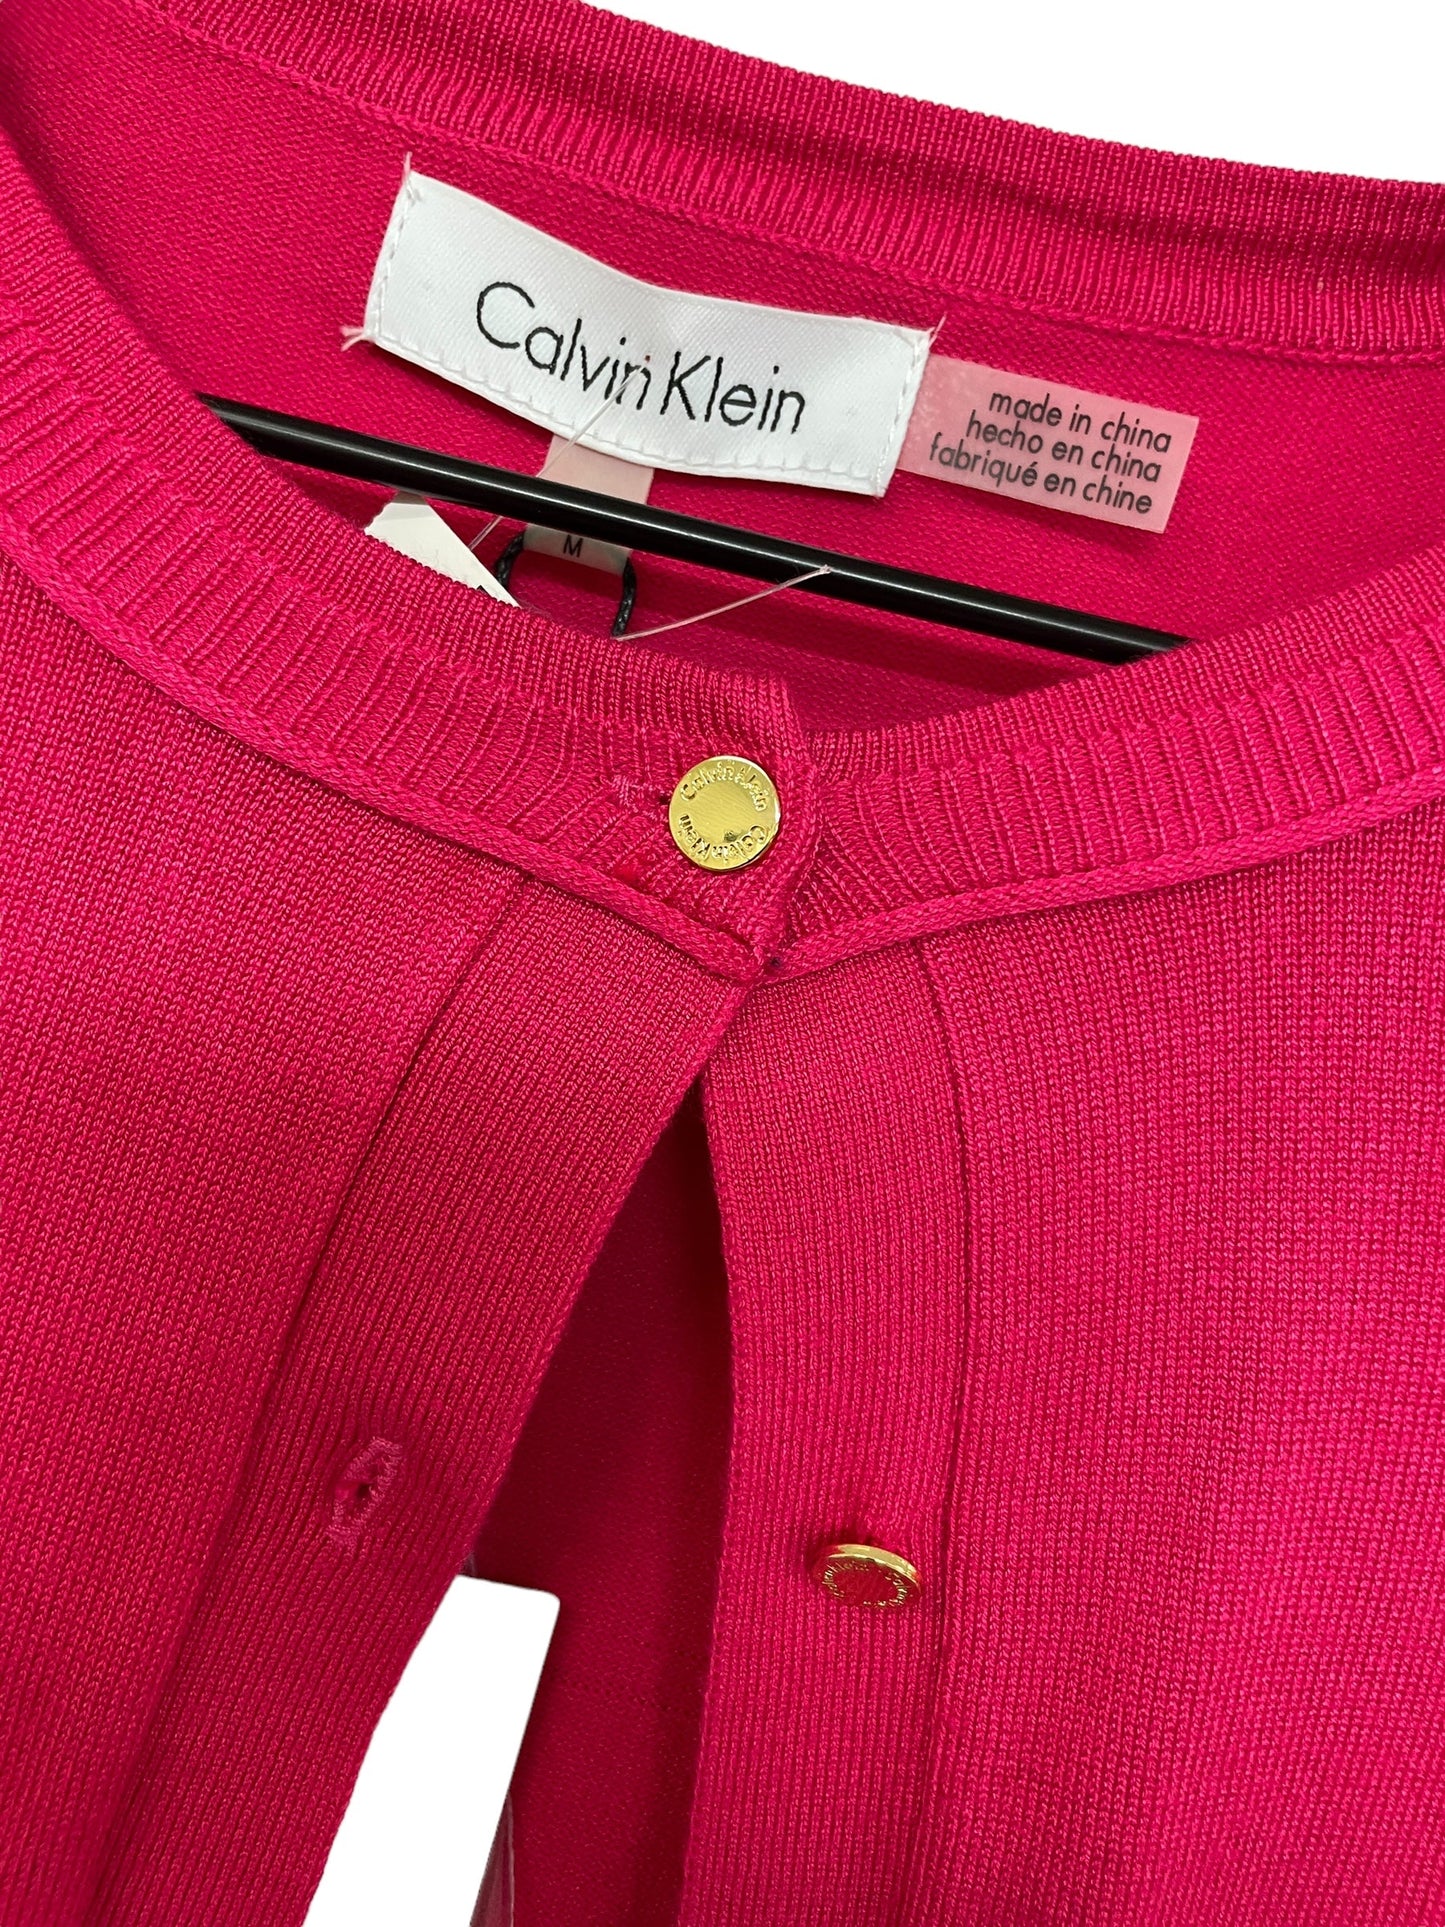 Cardigan By Calvin Klein  Size: M